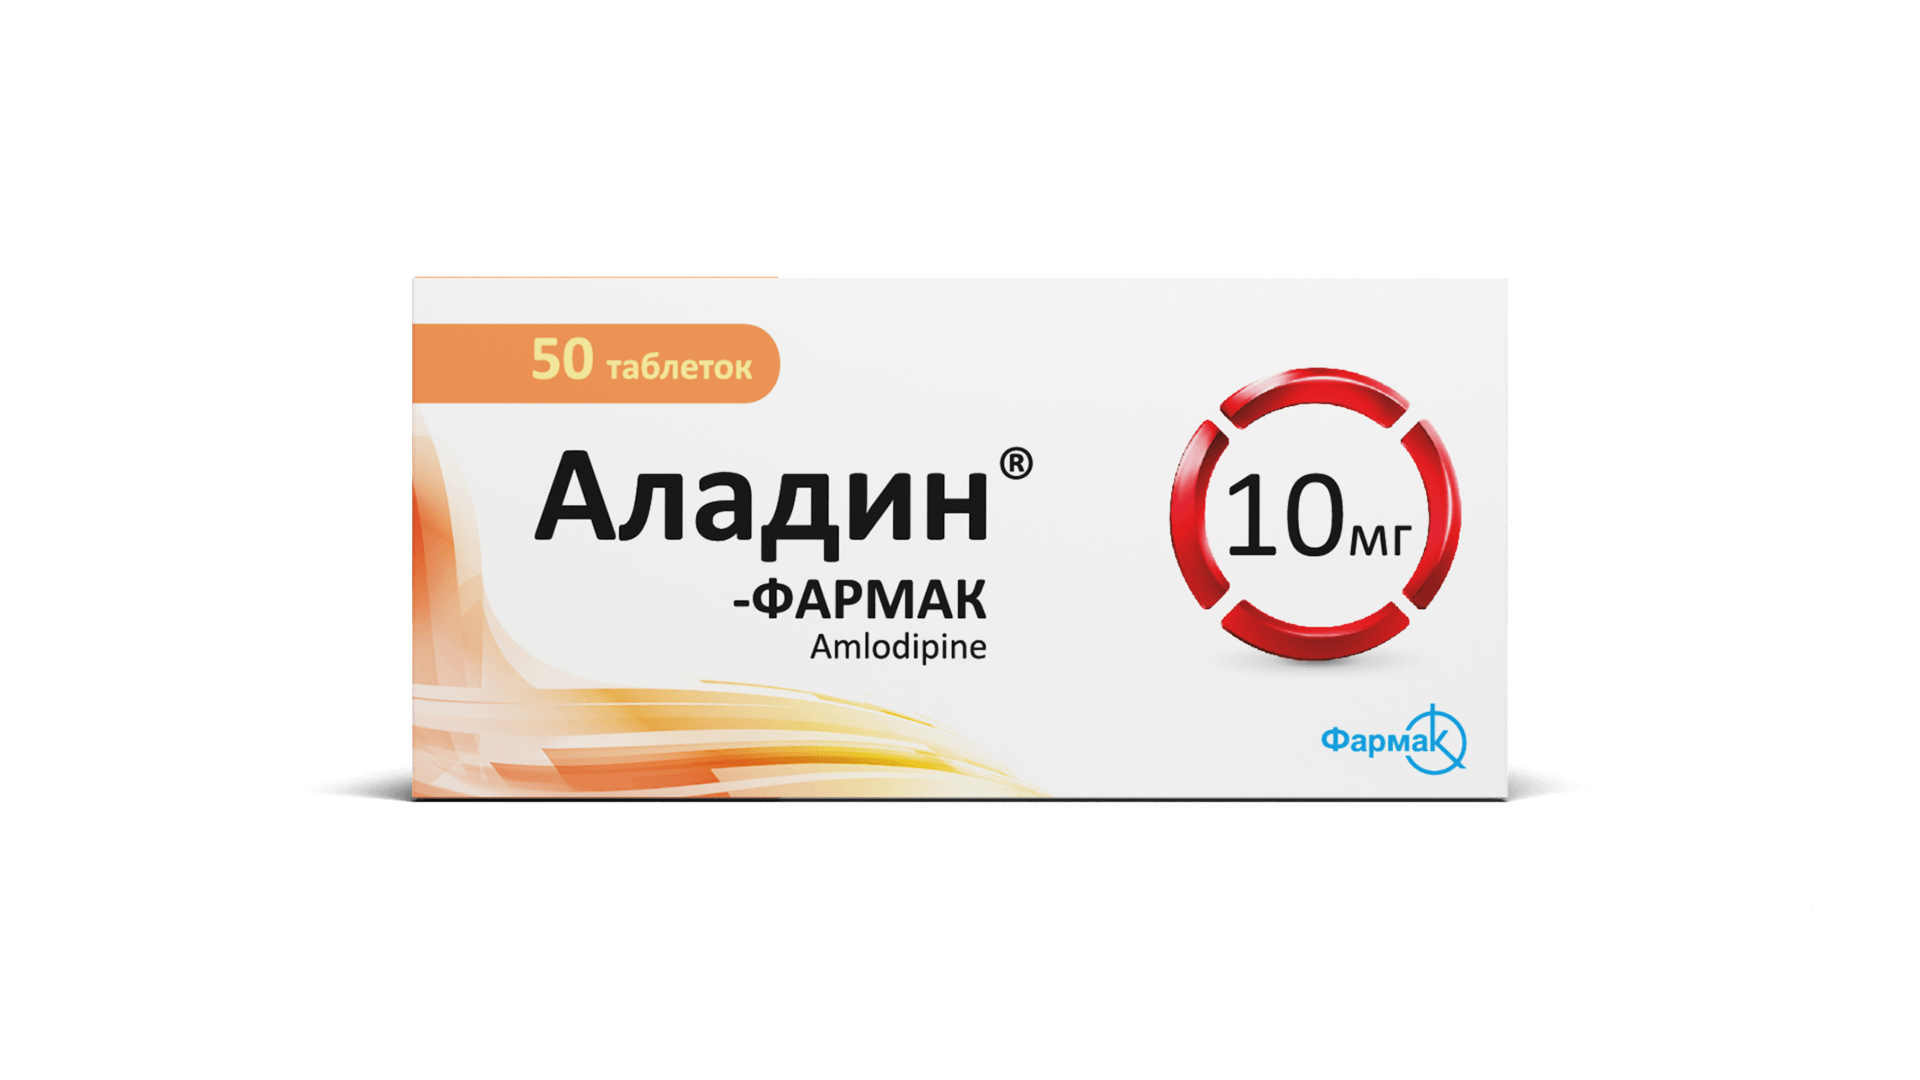 Аладин — Фармак 10 мг (5)